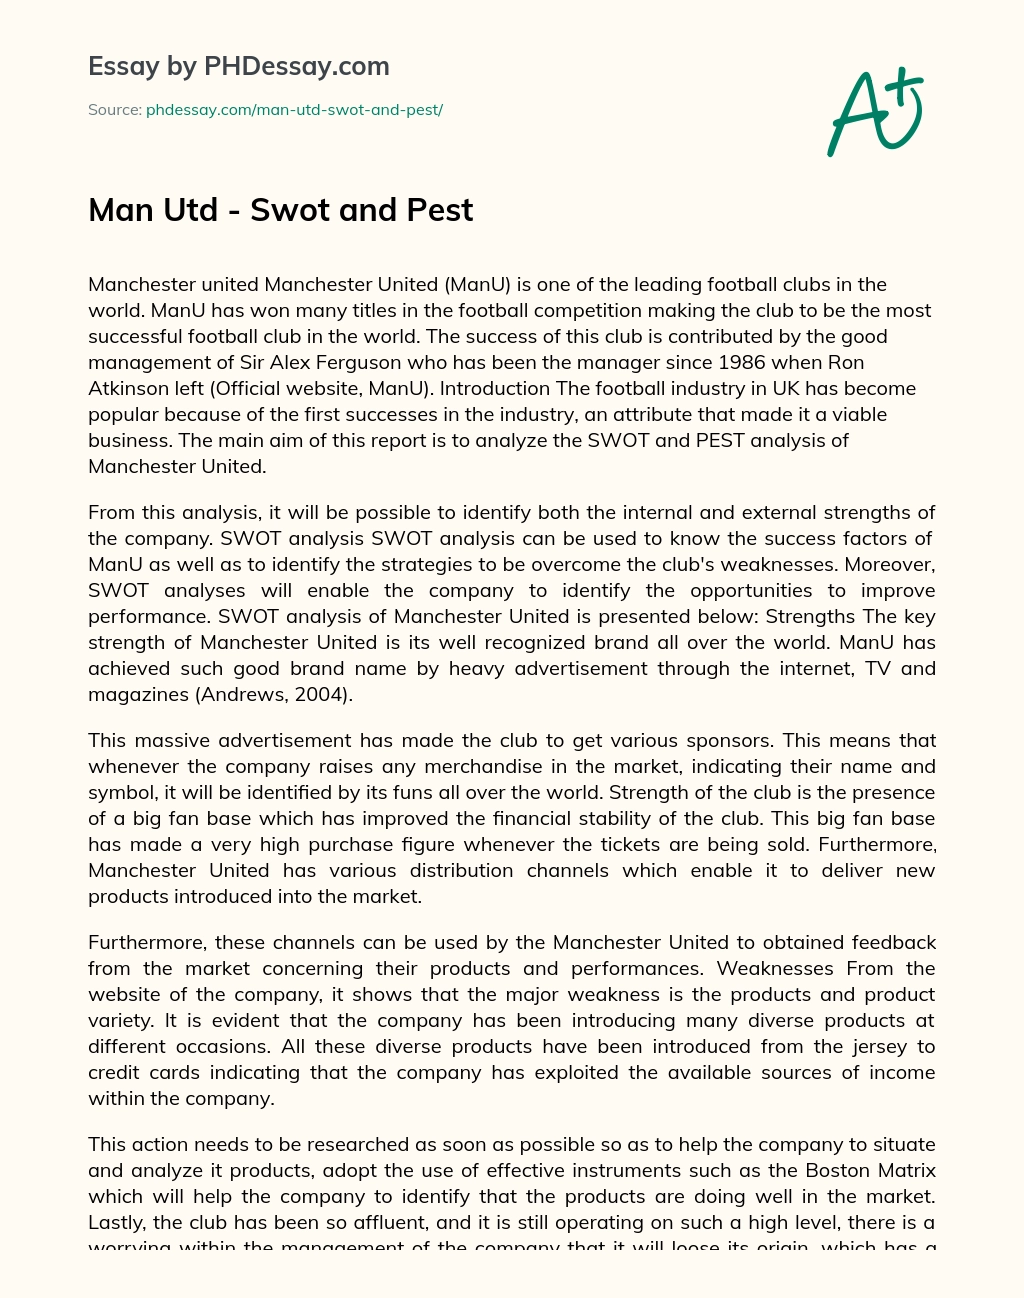 Man Utd – Swot and Pest essay